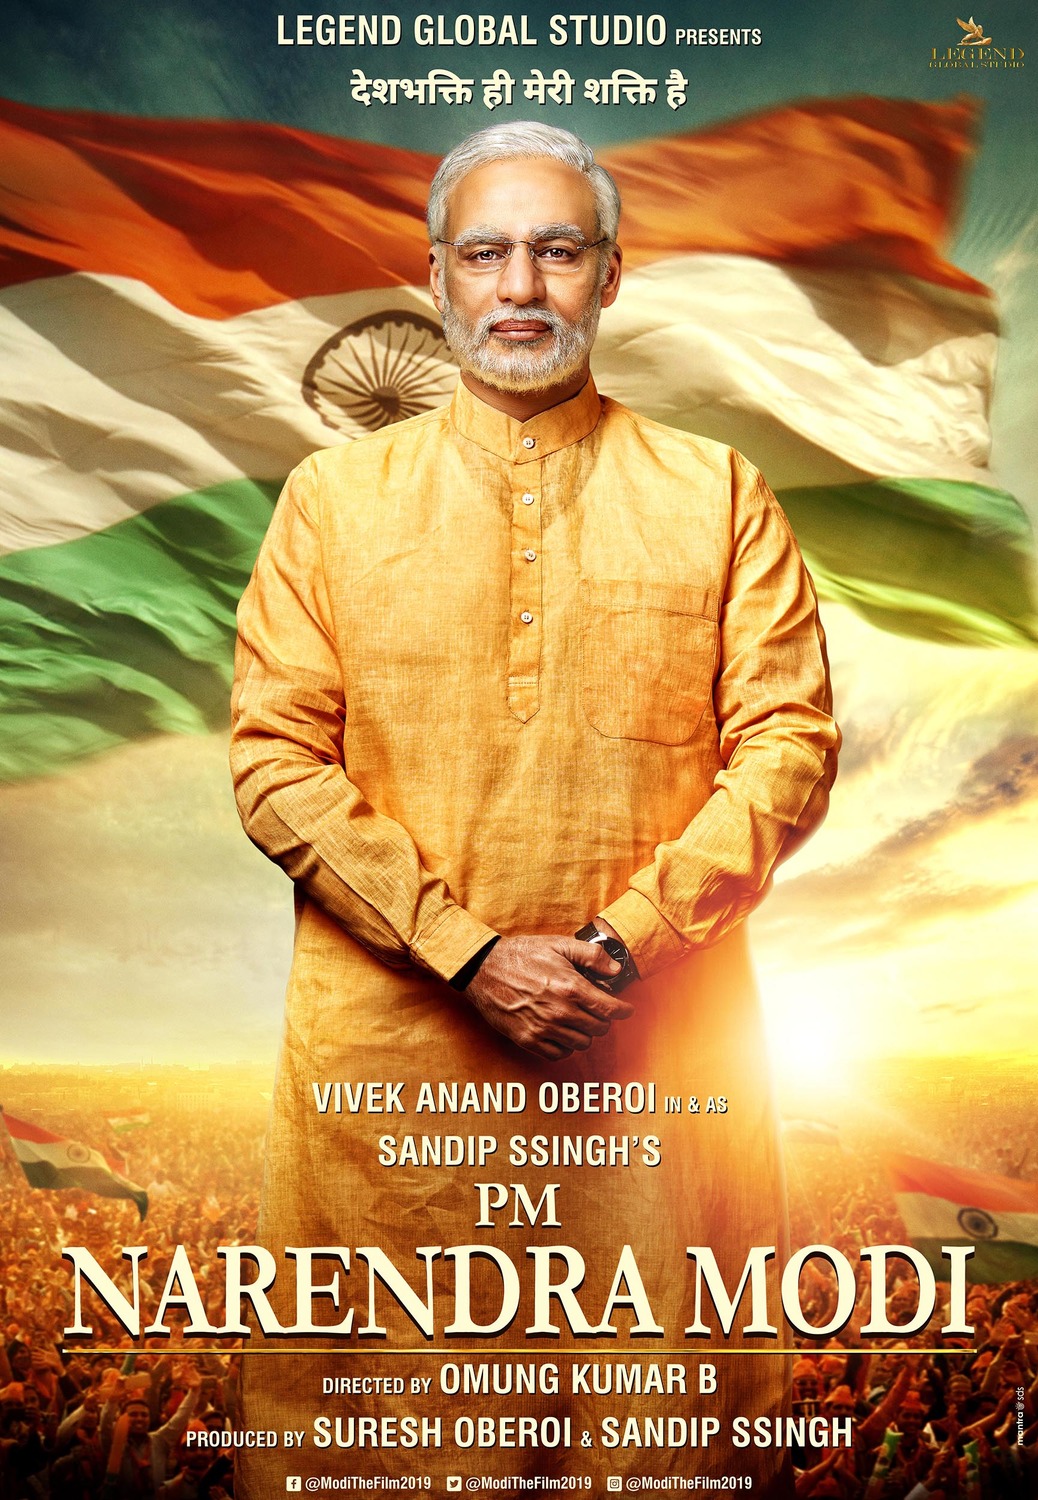 Extra Large Movie Poster Image for PM Narendra Modi 